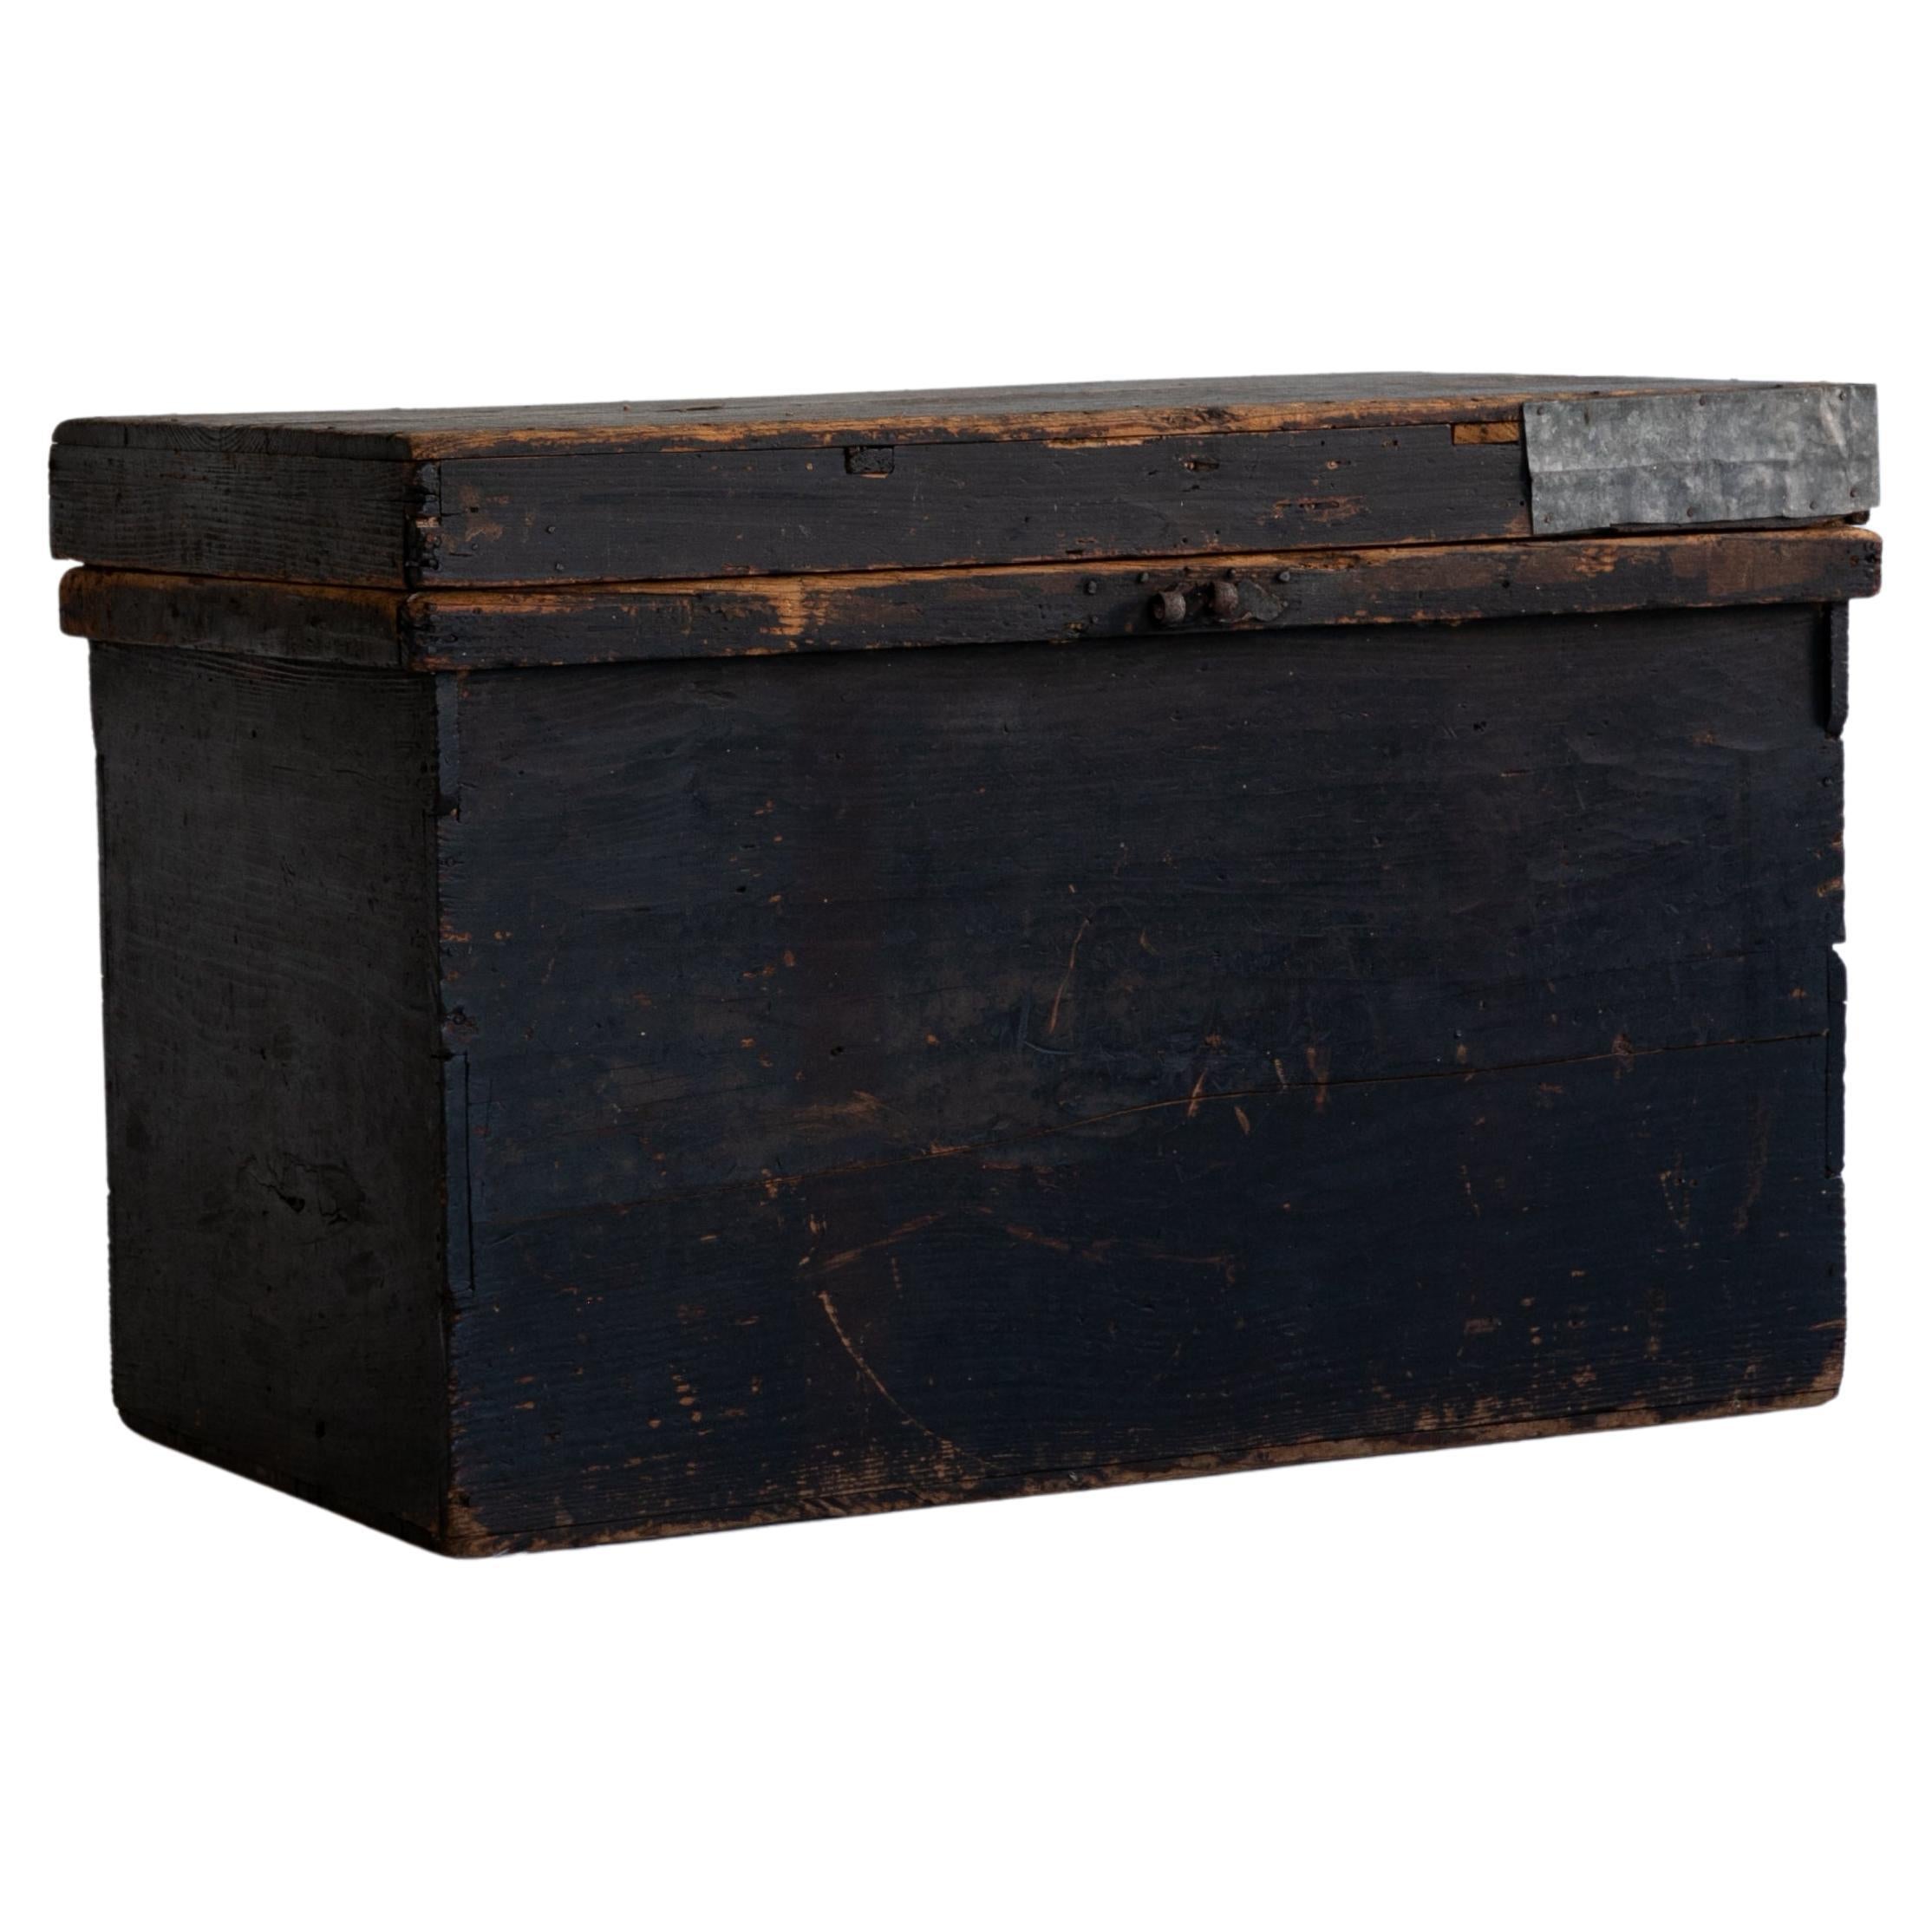 Japanese Antique Black Wooden Box 1860s-1900s / Sofa Table Tansu Wabi Sabi